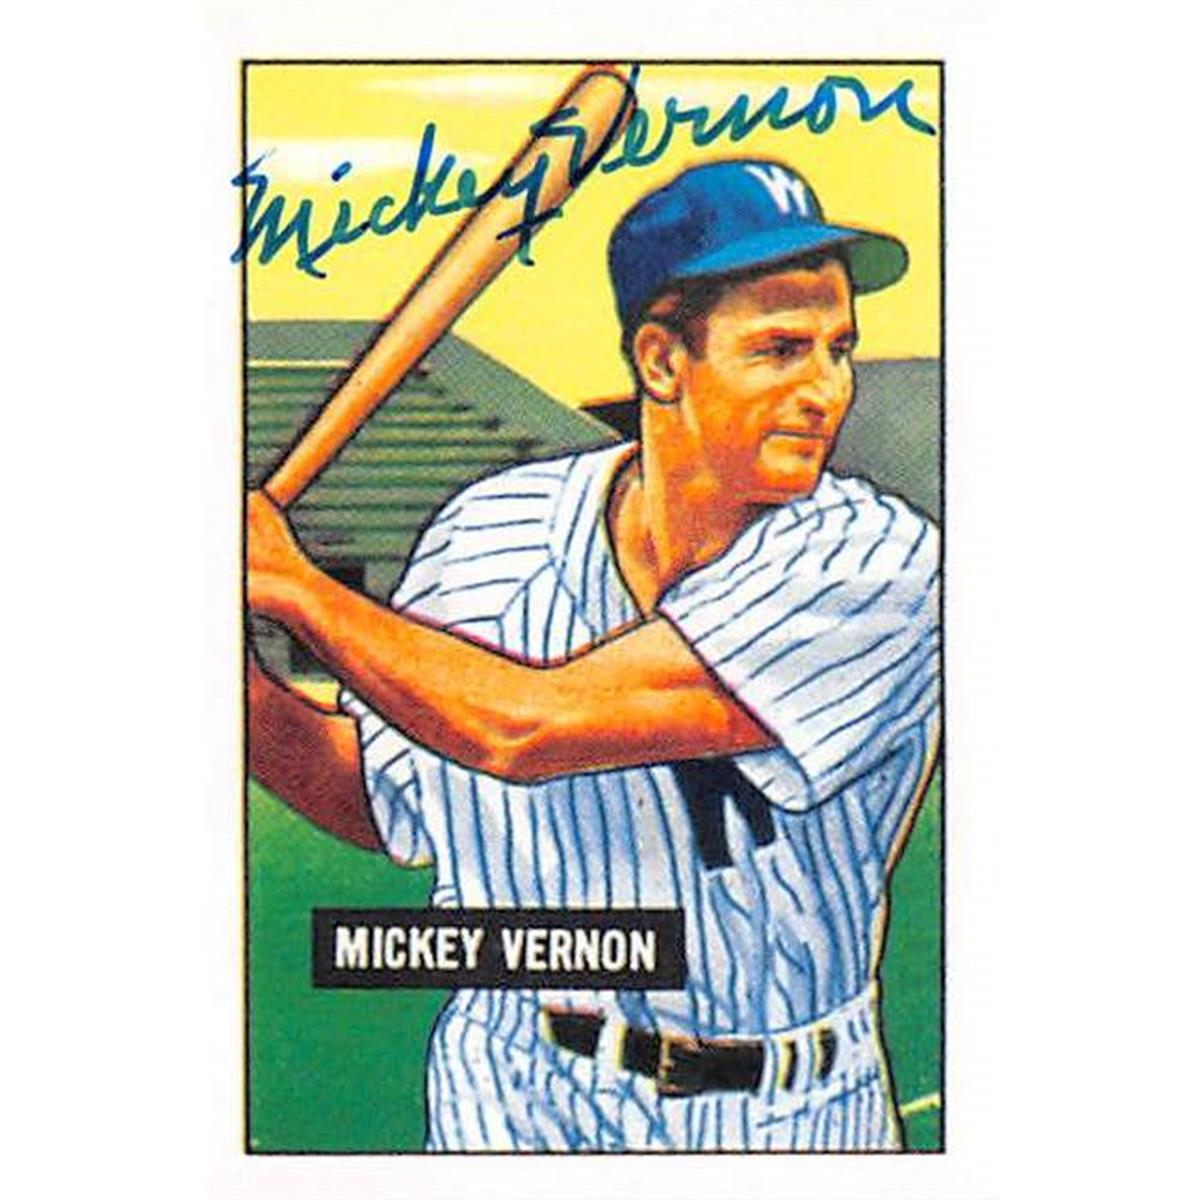 420953 Mickey Vernon Autographed Baseball Card Washington Senators 67 1951 Bowman No.65 1986 Reprint -  Autograph Warehouse